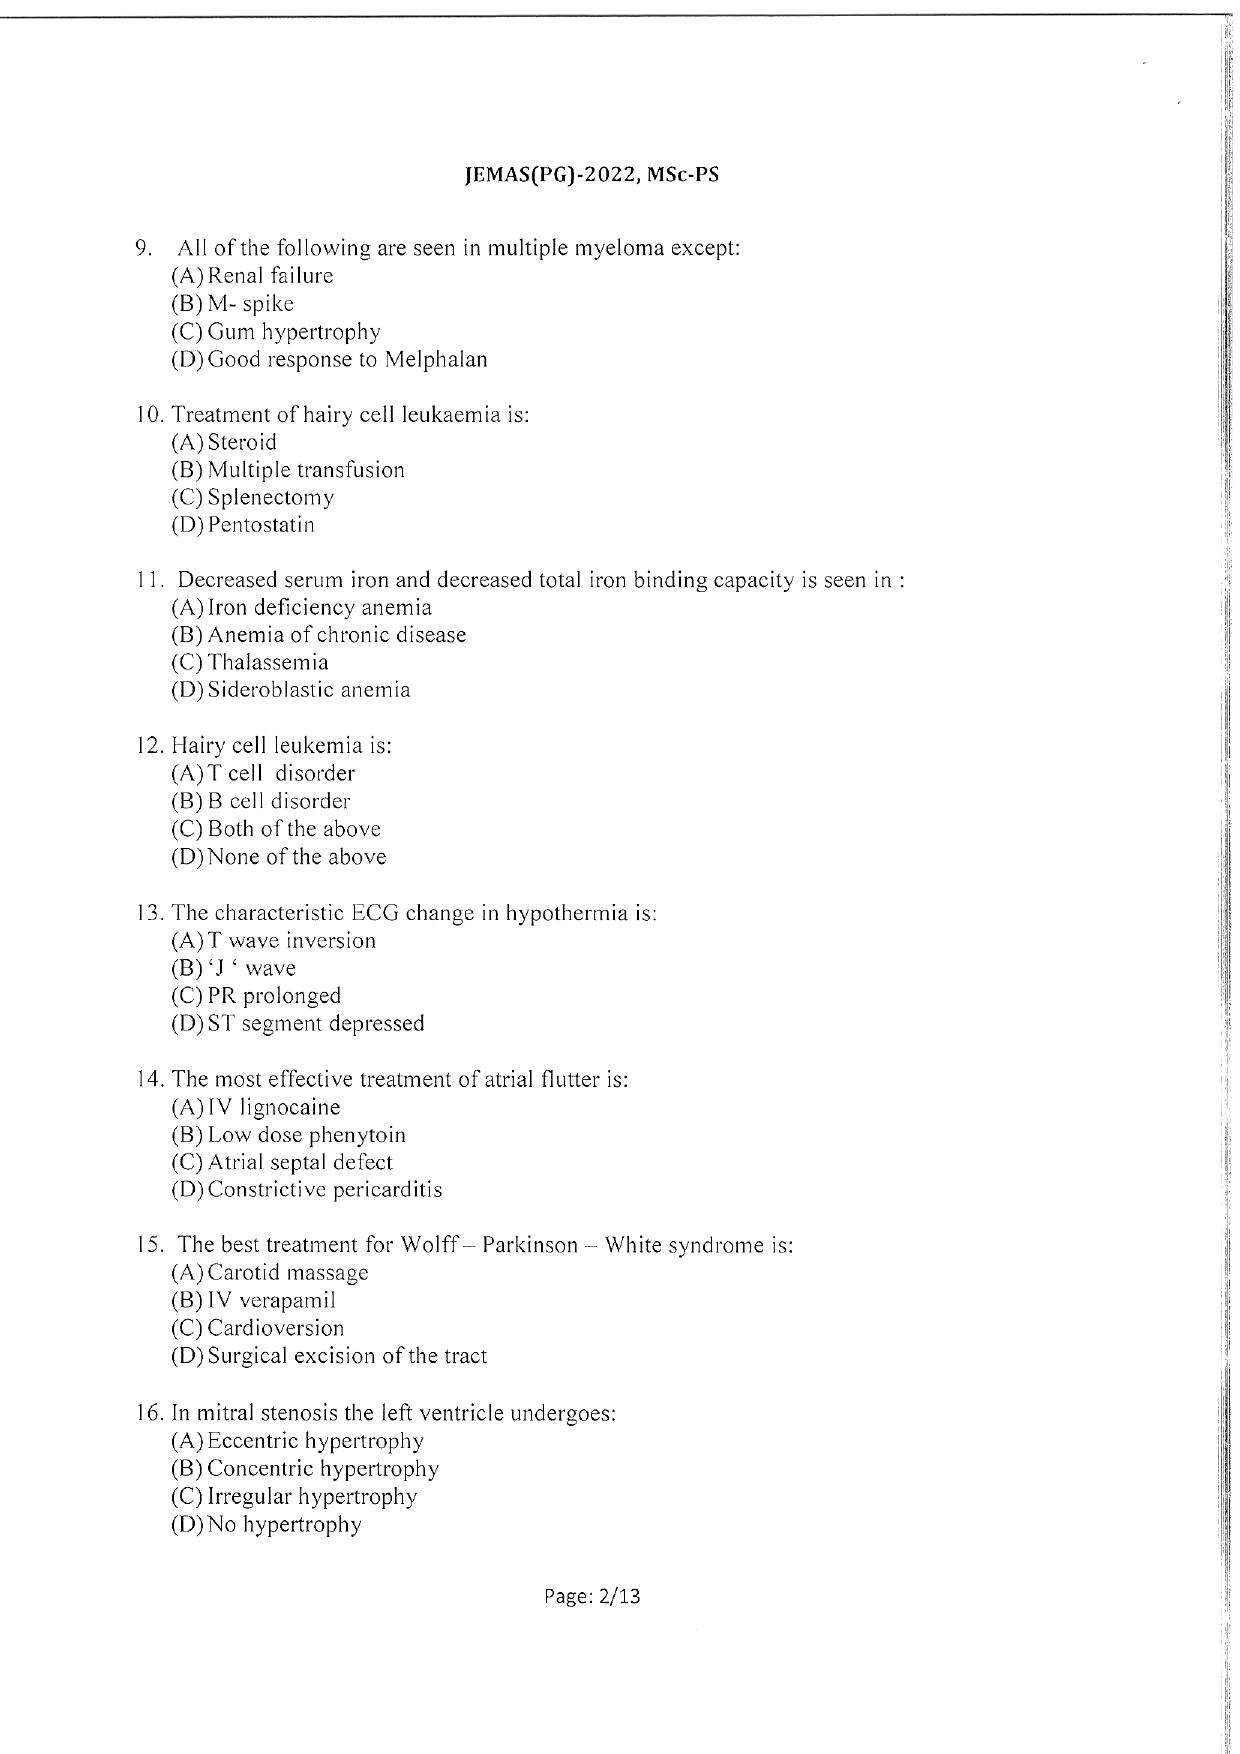 WBJEEB JEMAS (PG) 2022 MSc PS Question Paper - Page 4